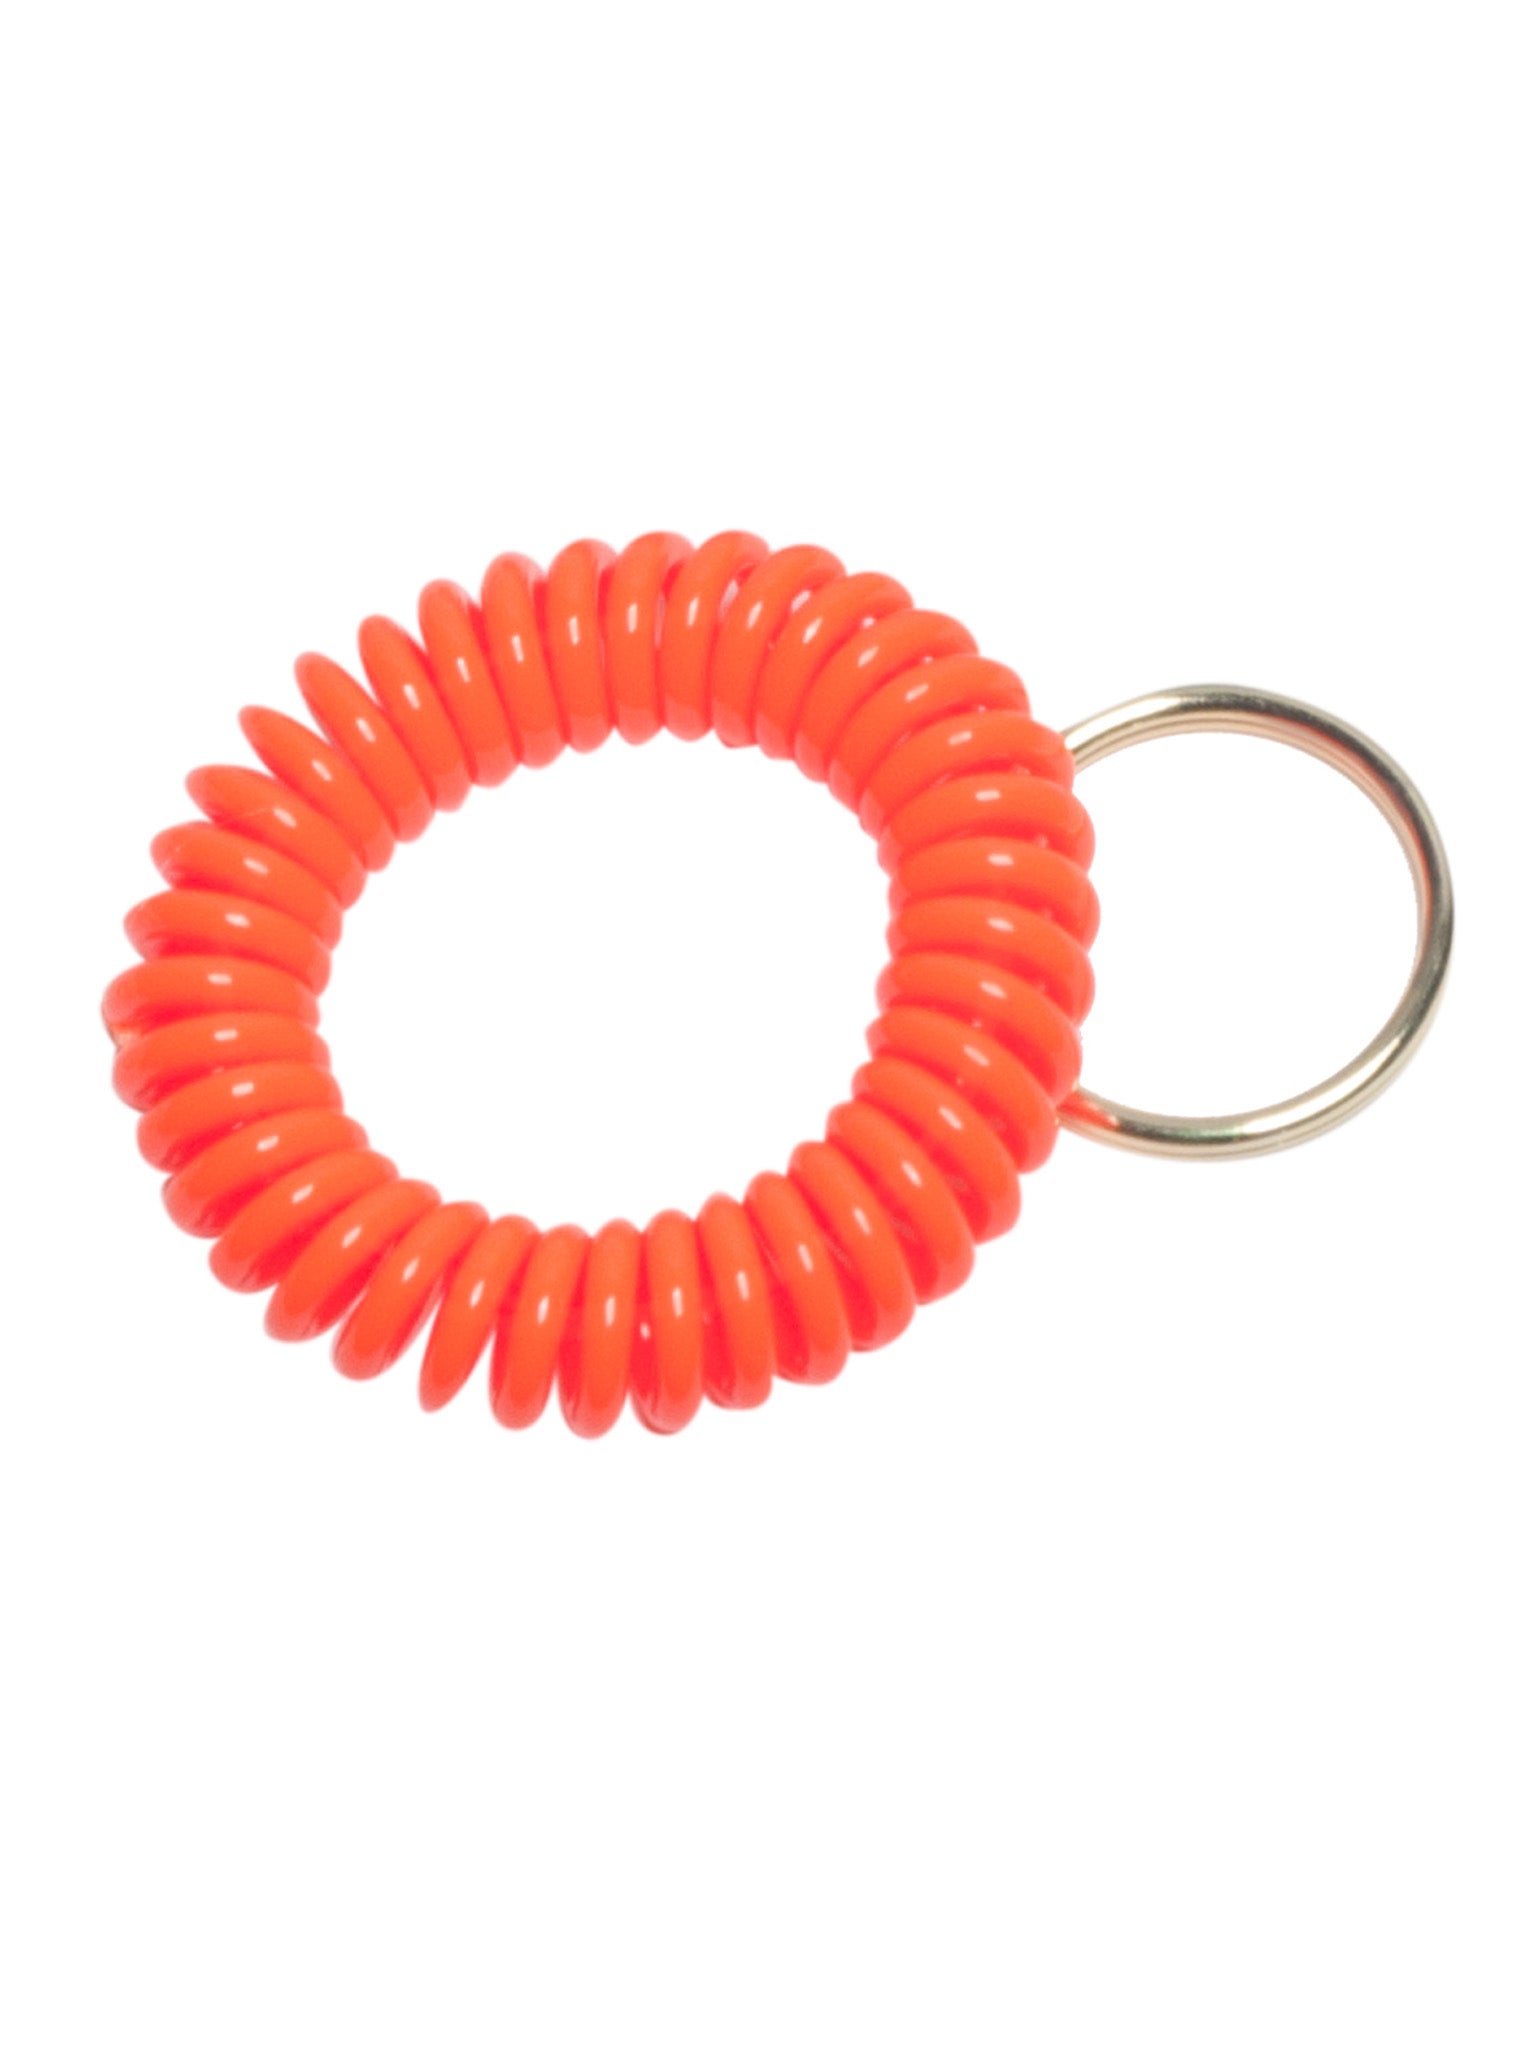 Spiral Bracelets For Whistle - Orange